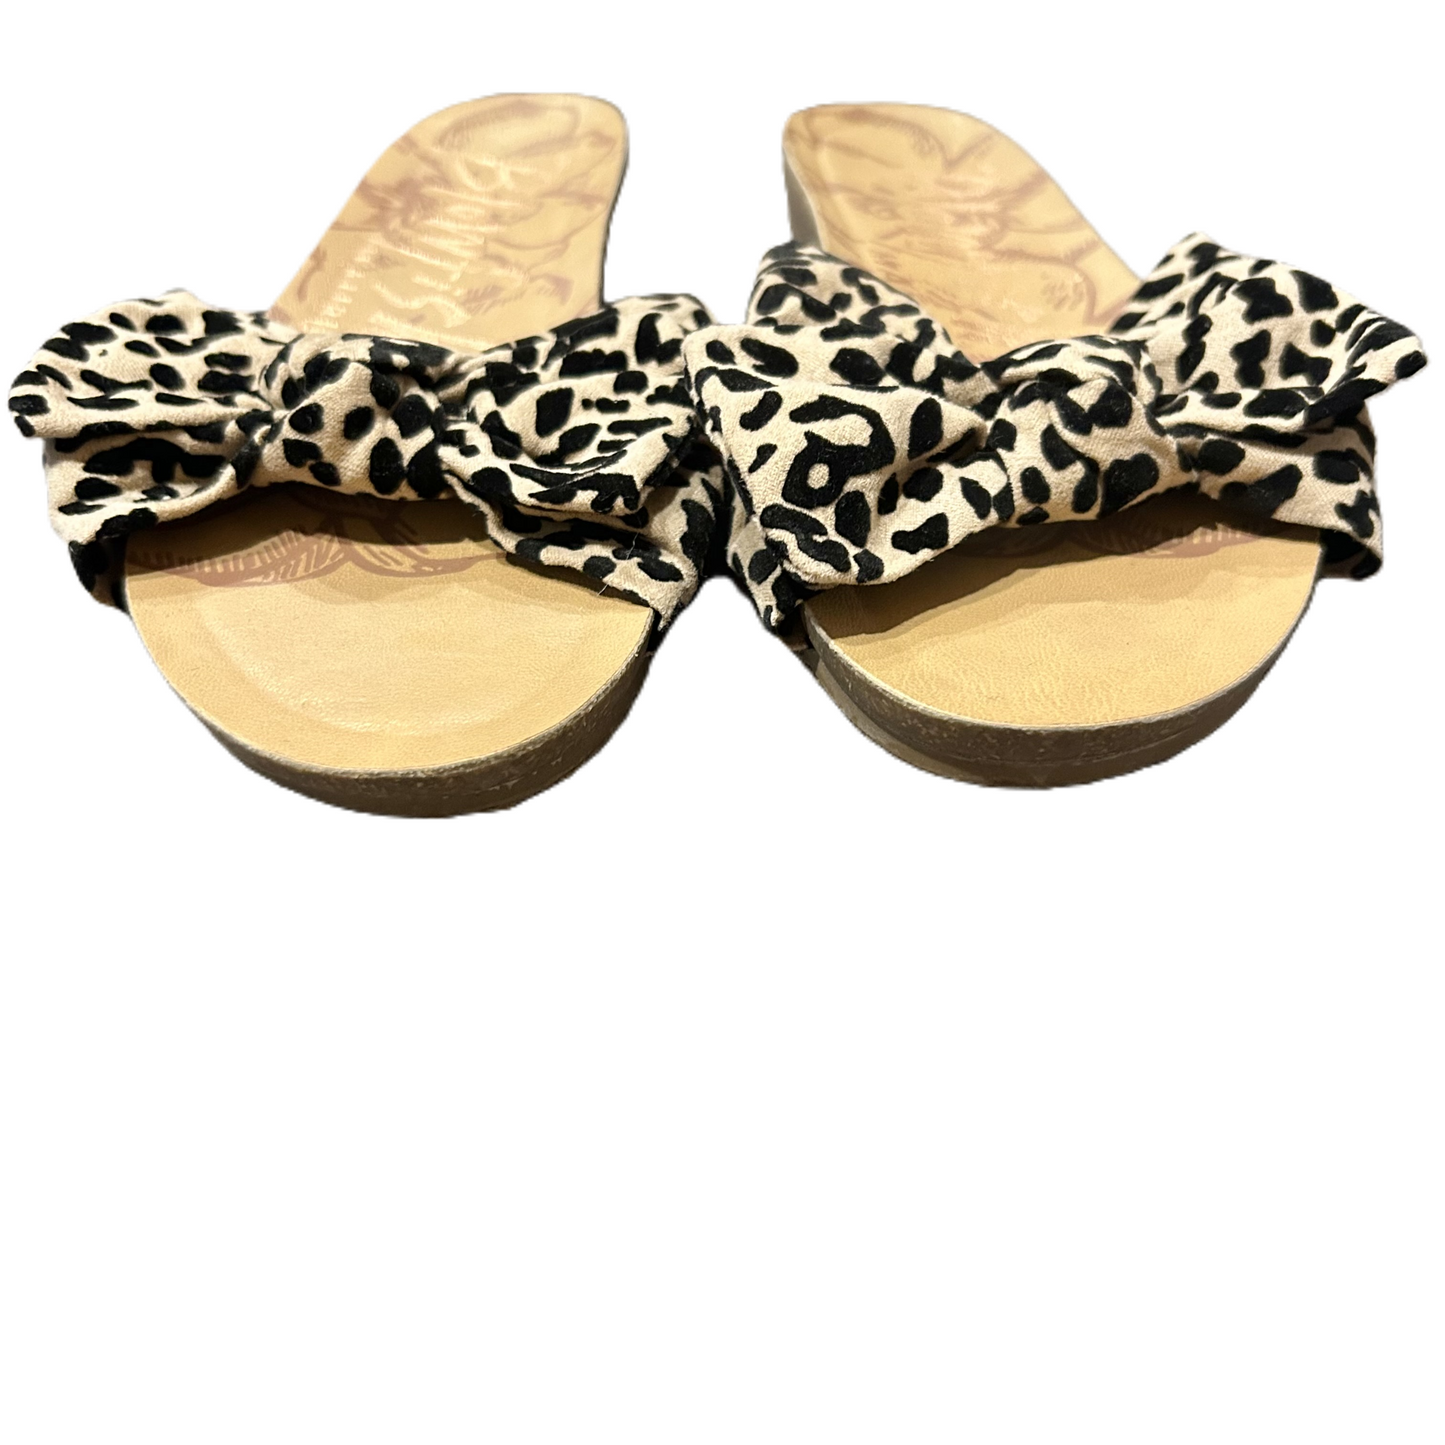 Leopard Print Shoes Flats By Blowfish, Size: 7